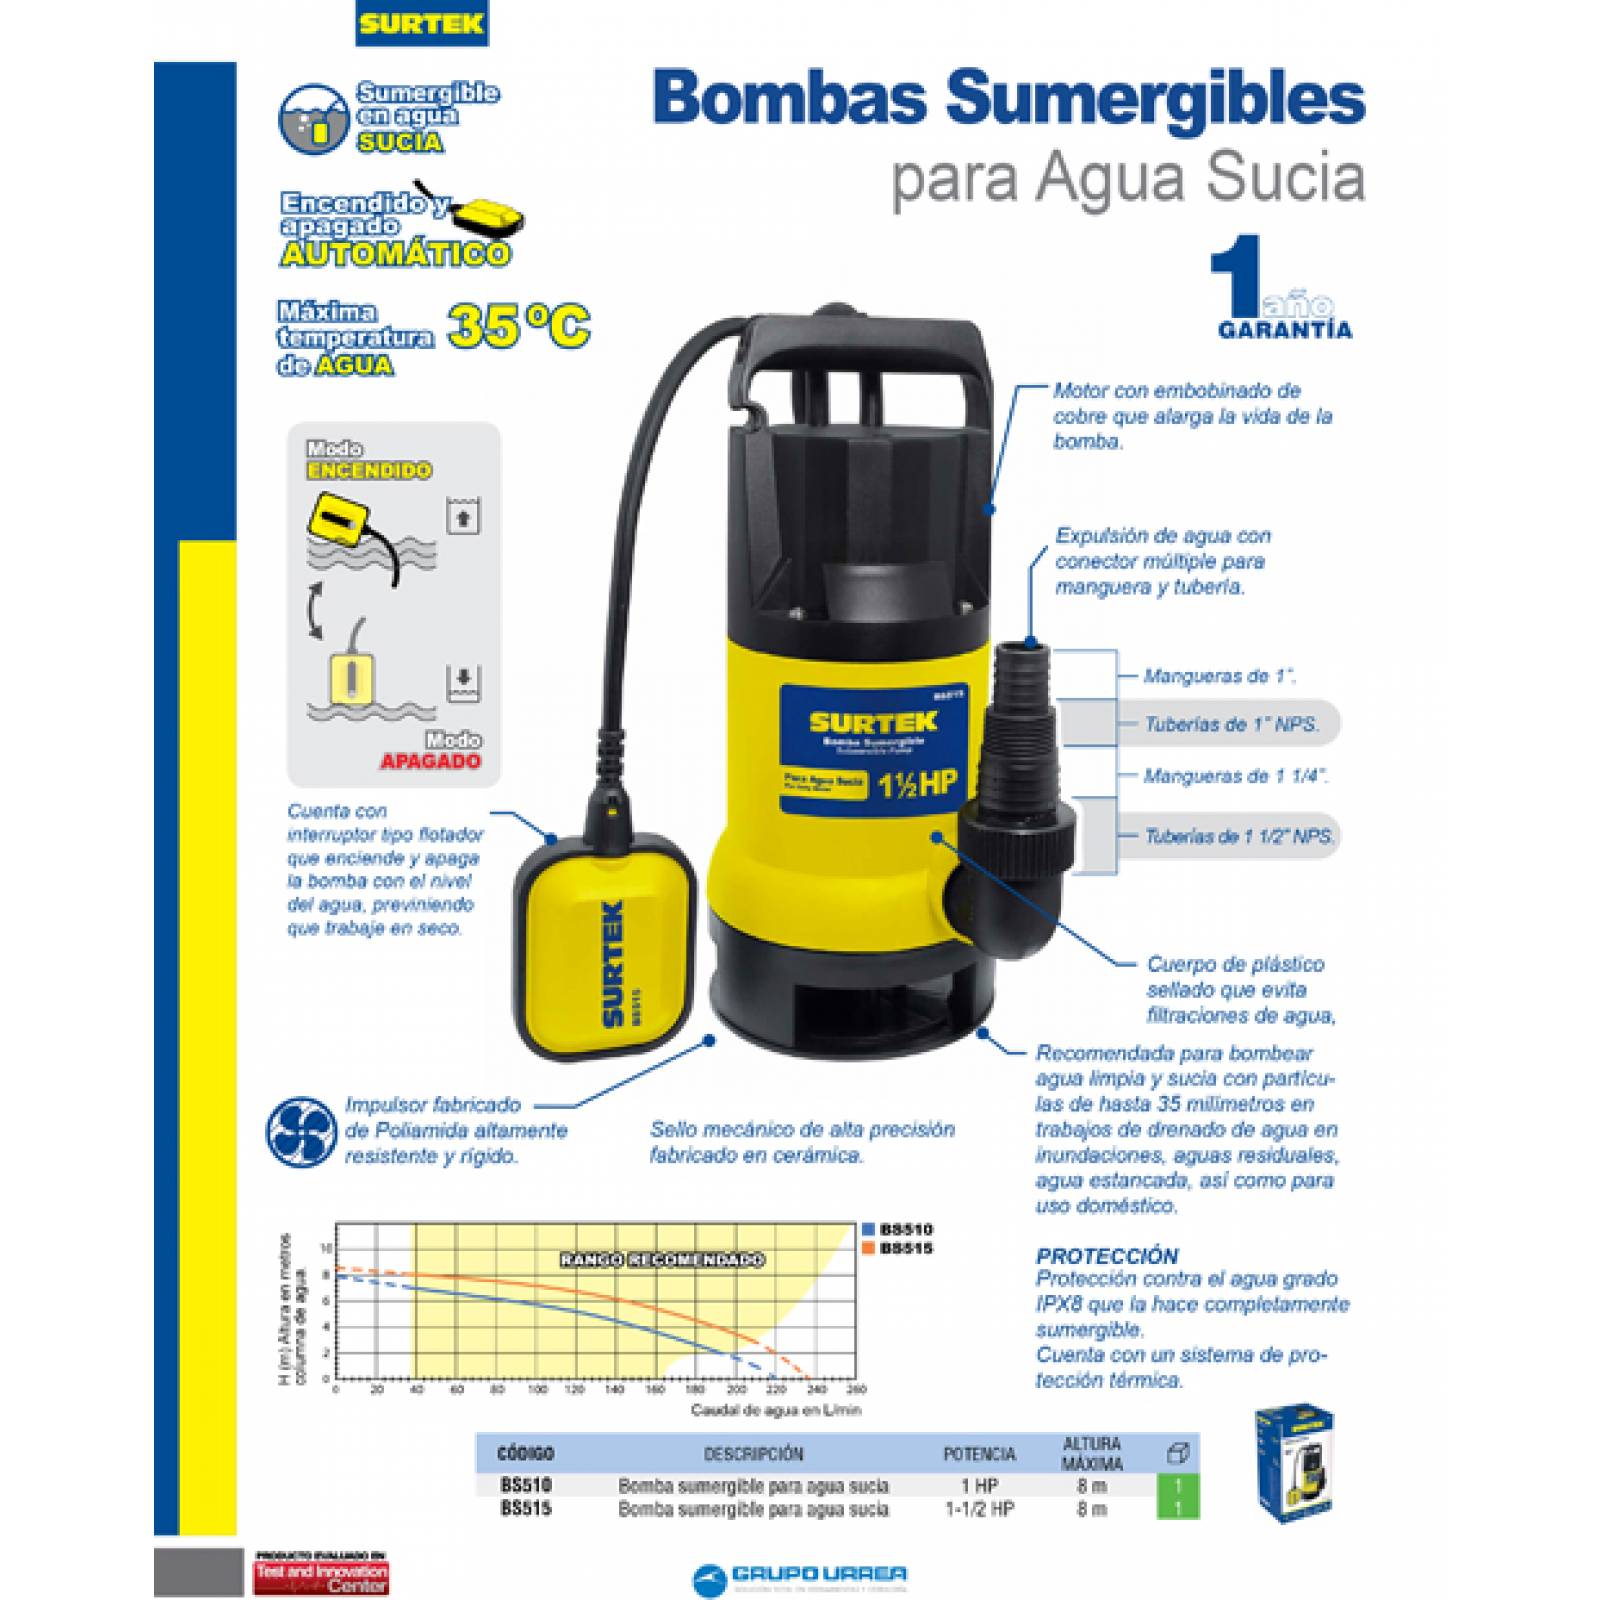 Bomba Sumergible Agua Sucia Potencia 1 Hp Bs510 Surtek 